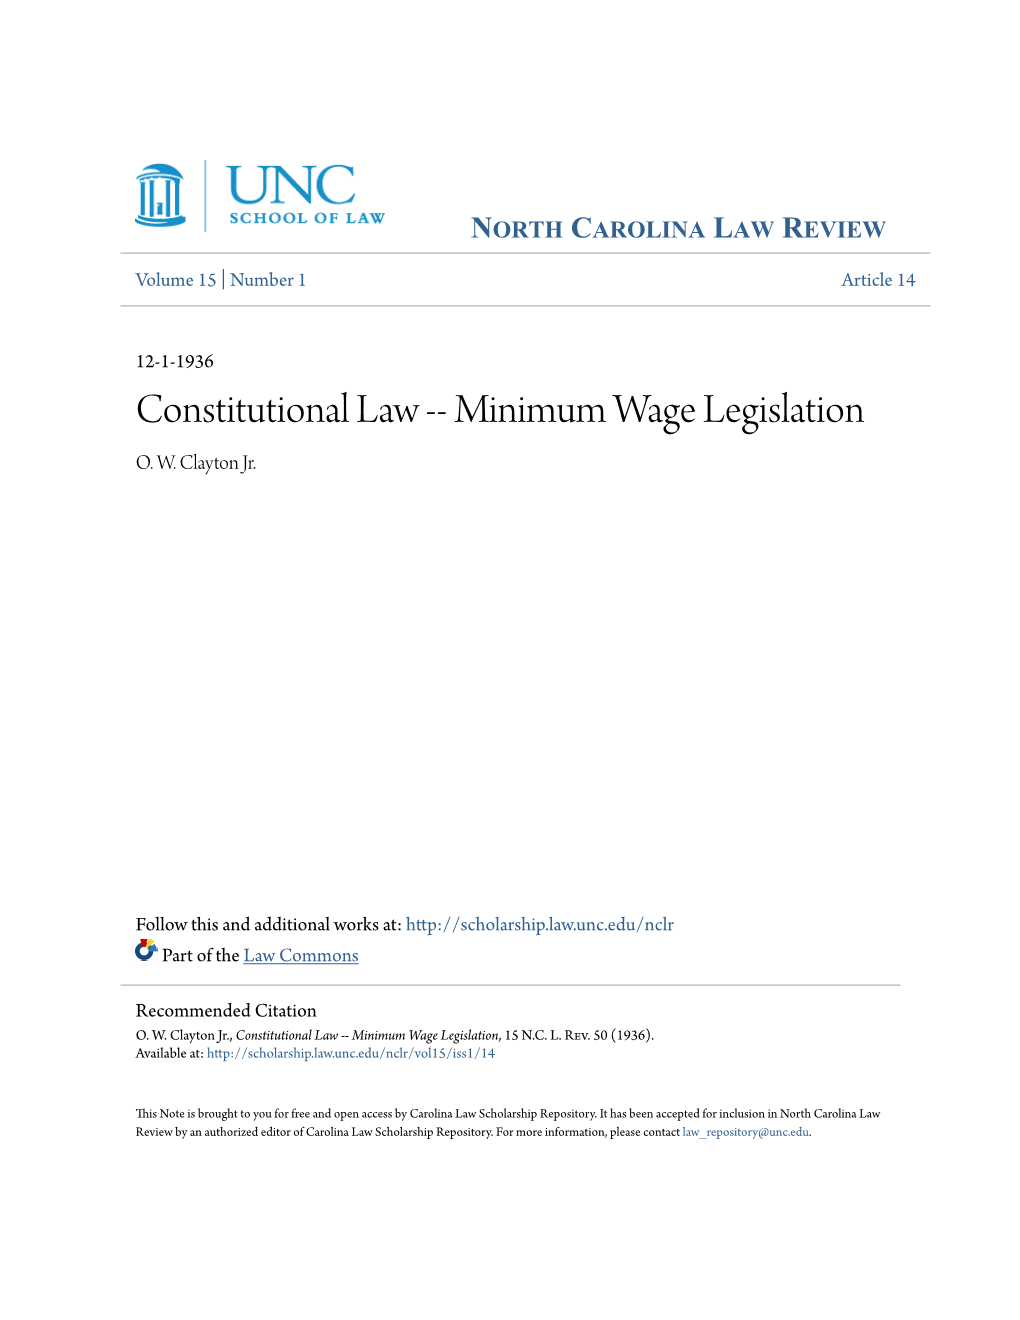 Constitutional Law -- Minimum Wage Legislation O